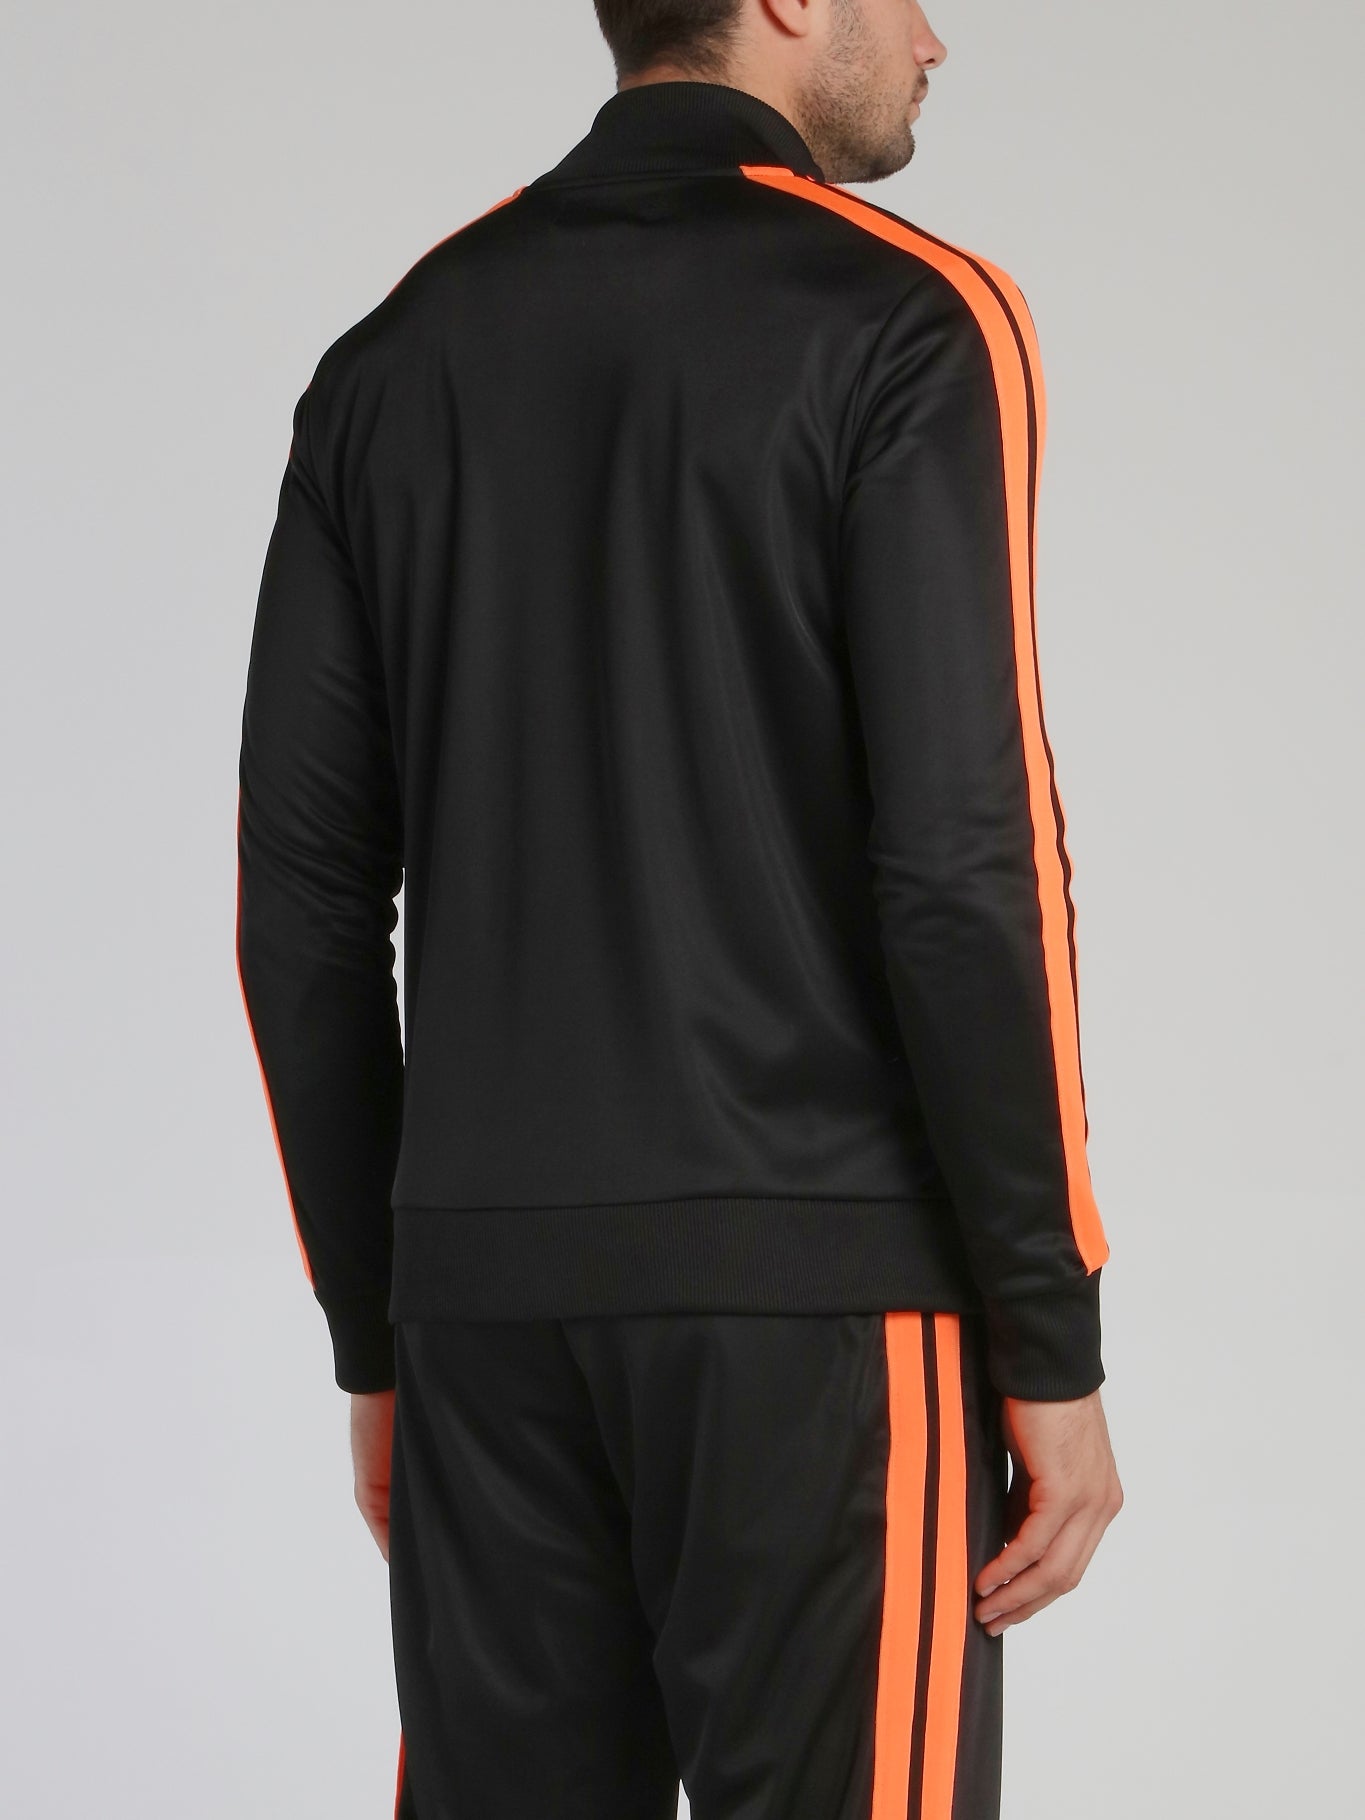 Black with Orange Contrast Lining Sweatshirt